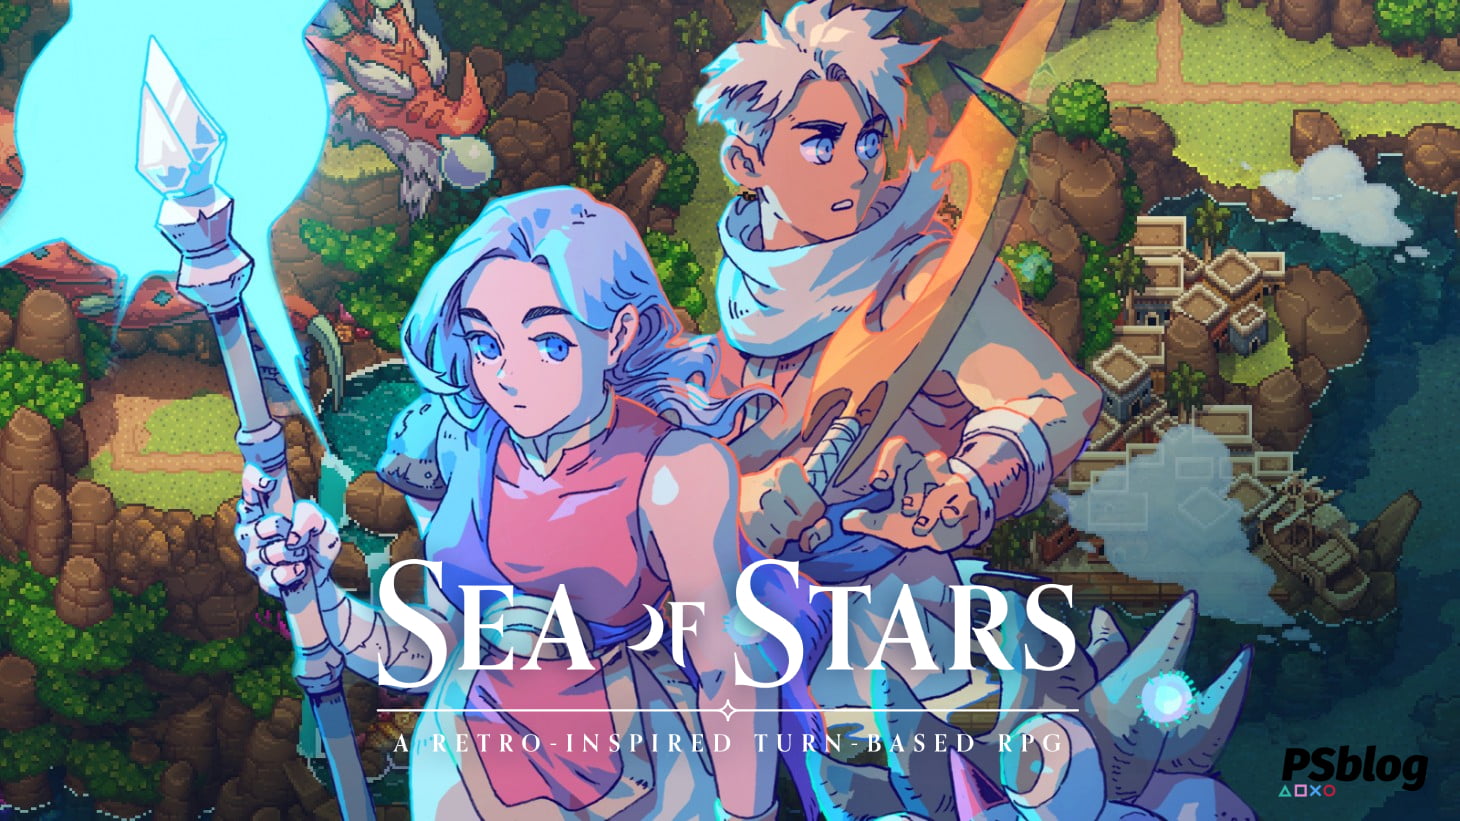 Sea of Stars - A retro-inspired turn-based RPG